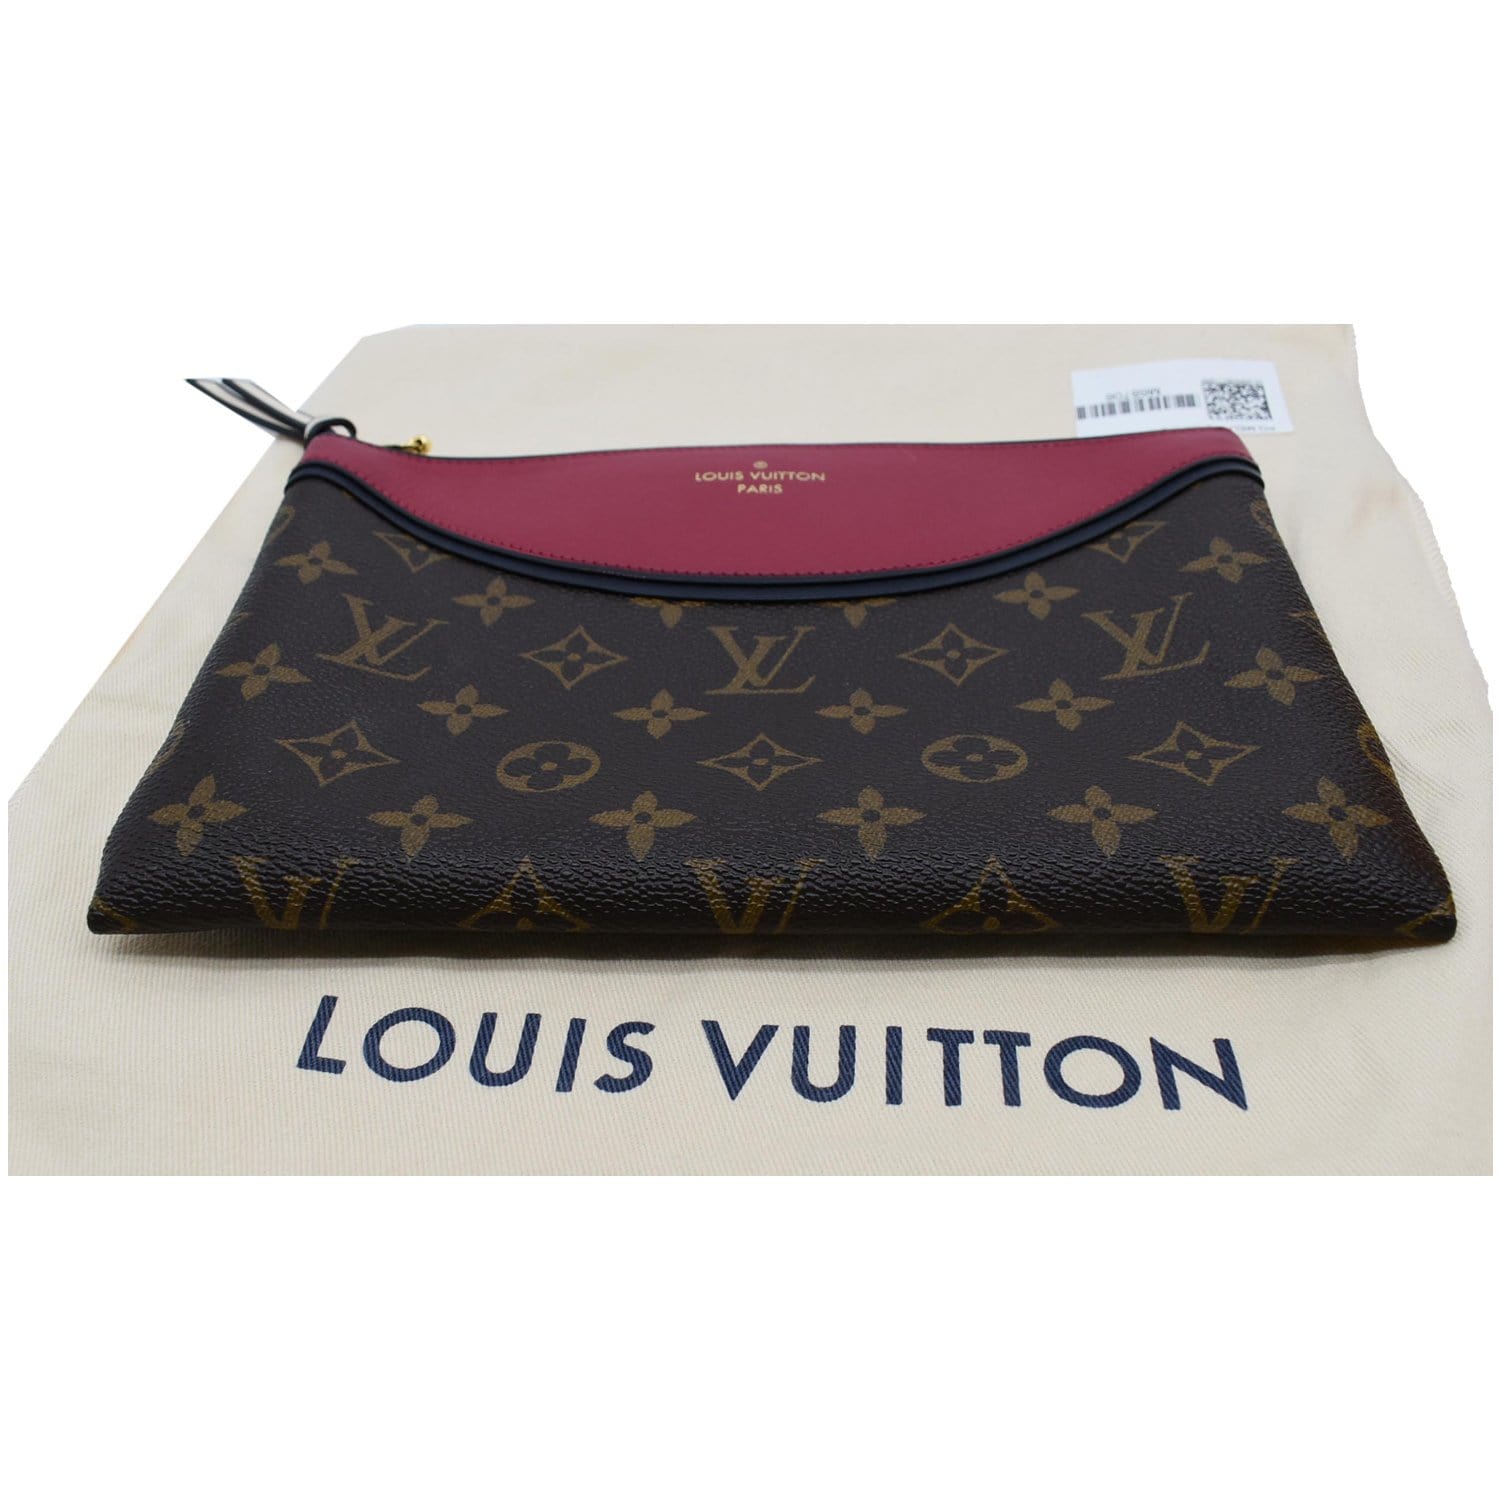 Authentic Louis Vuitton Tuileries NM Bag